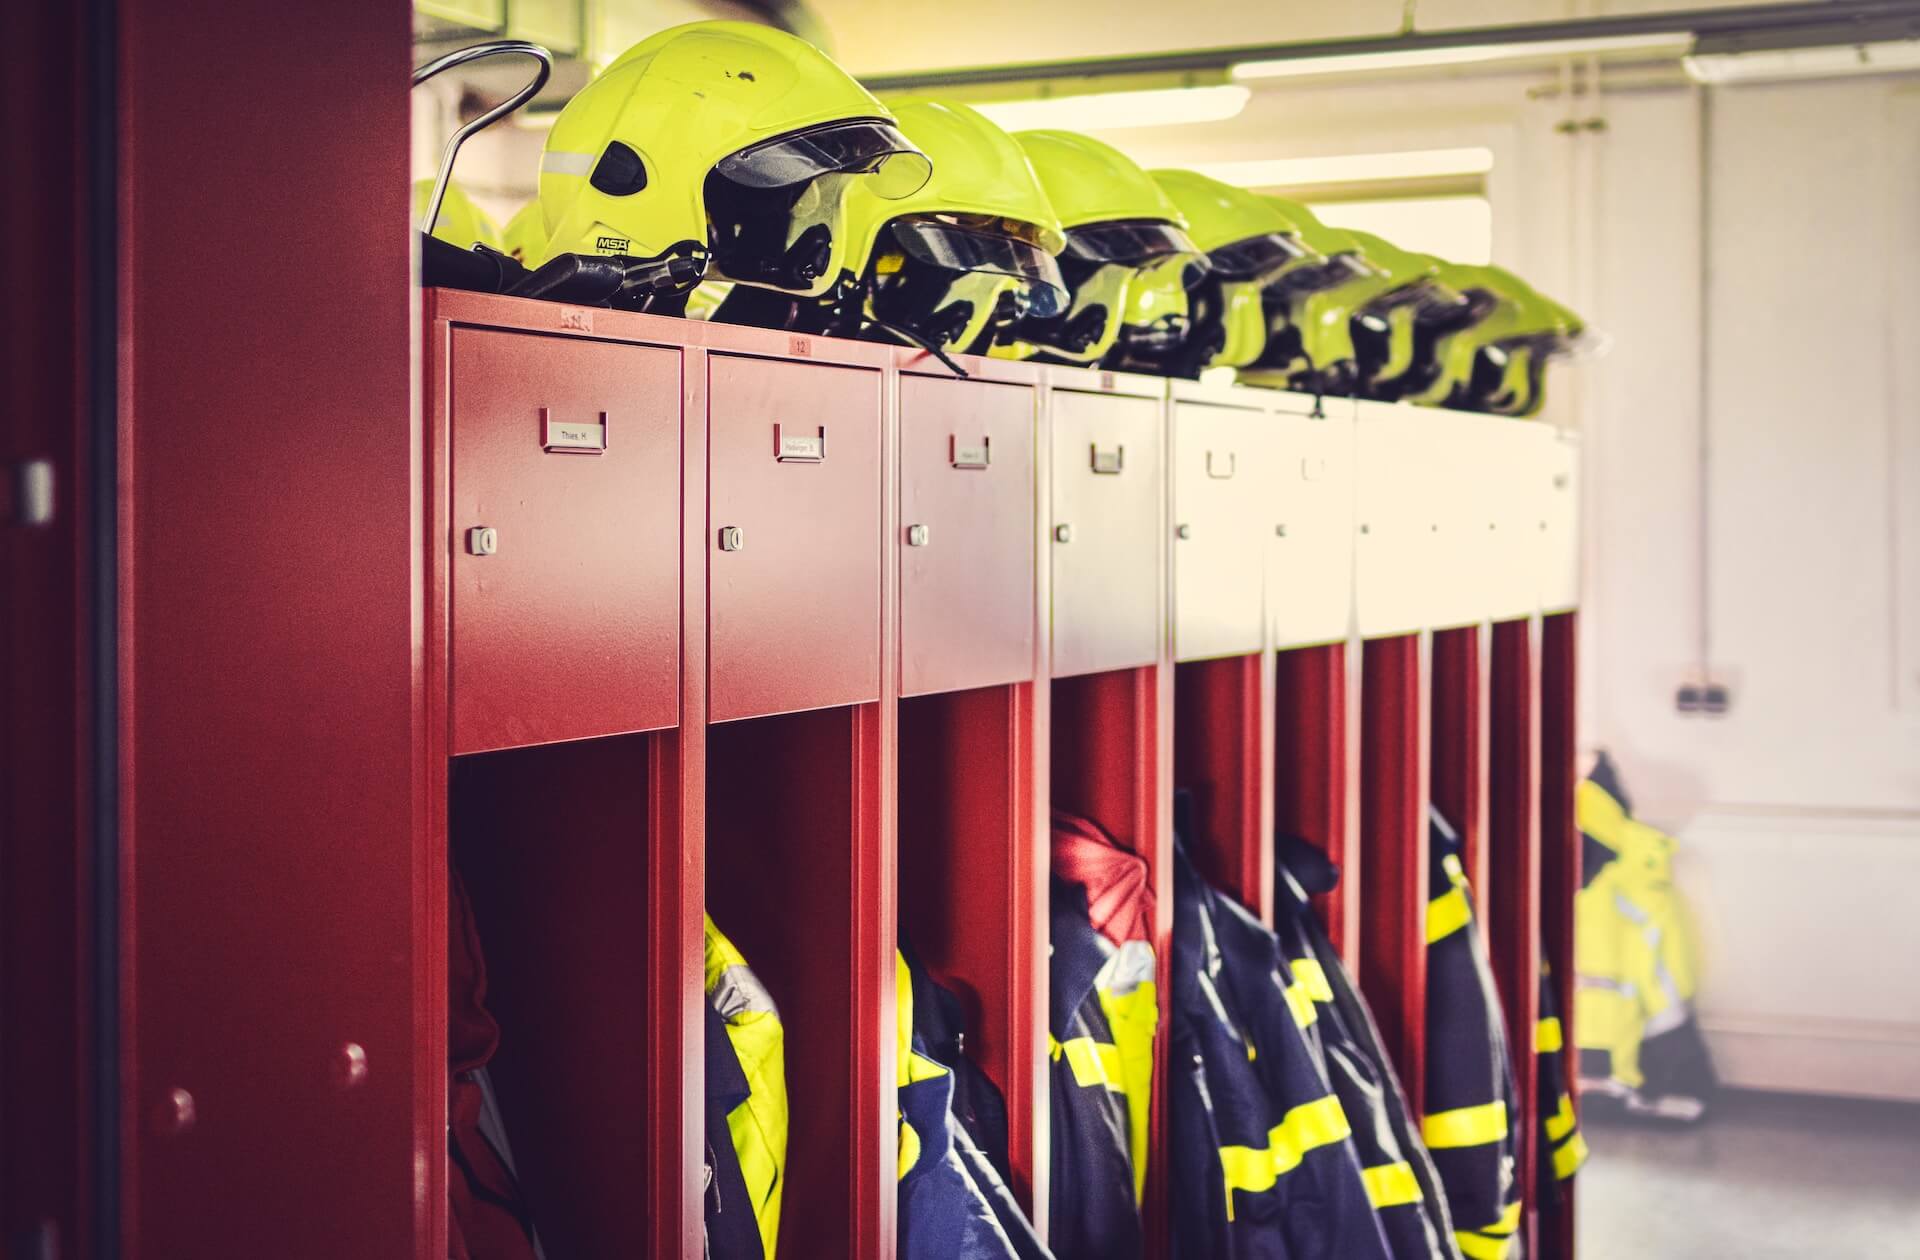 Firefighter safety gear